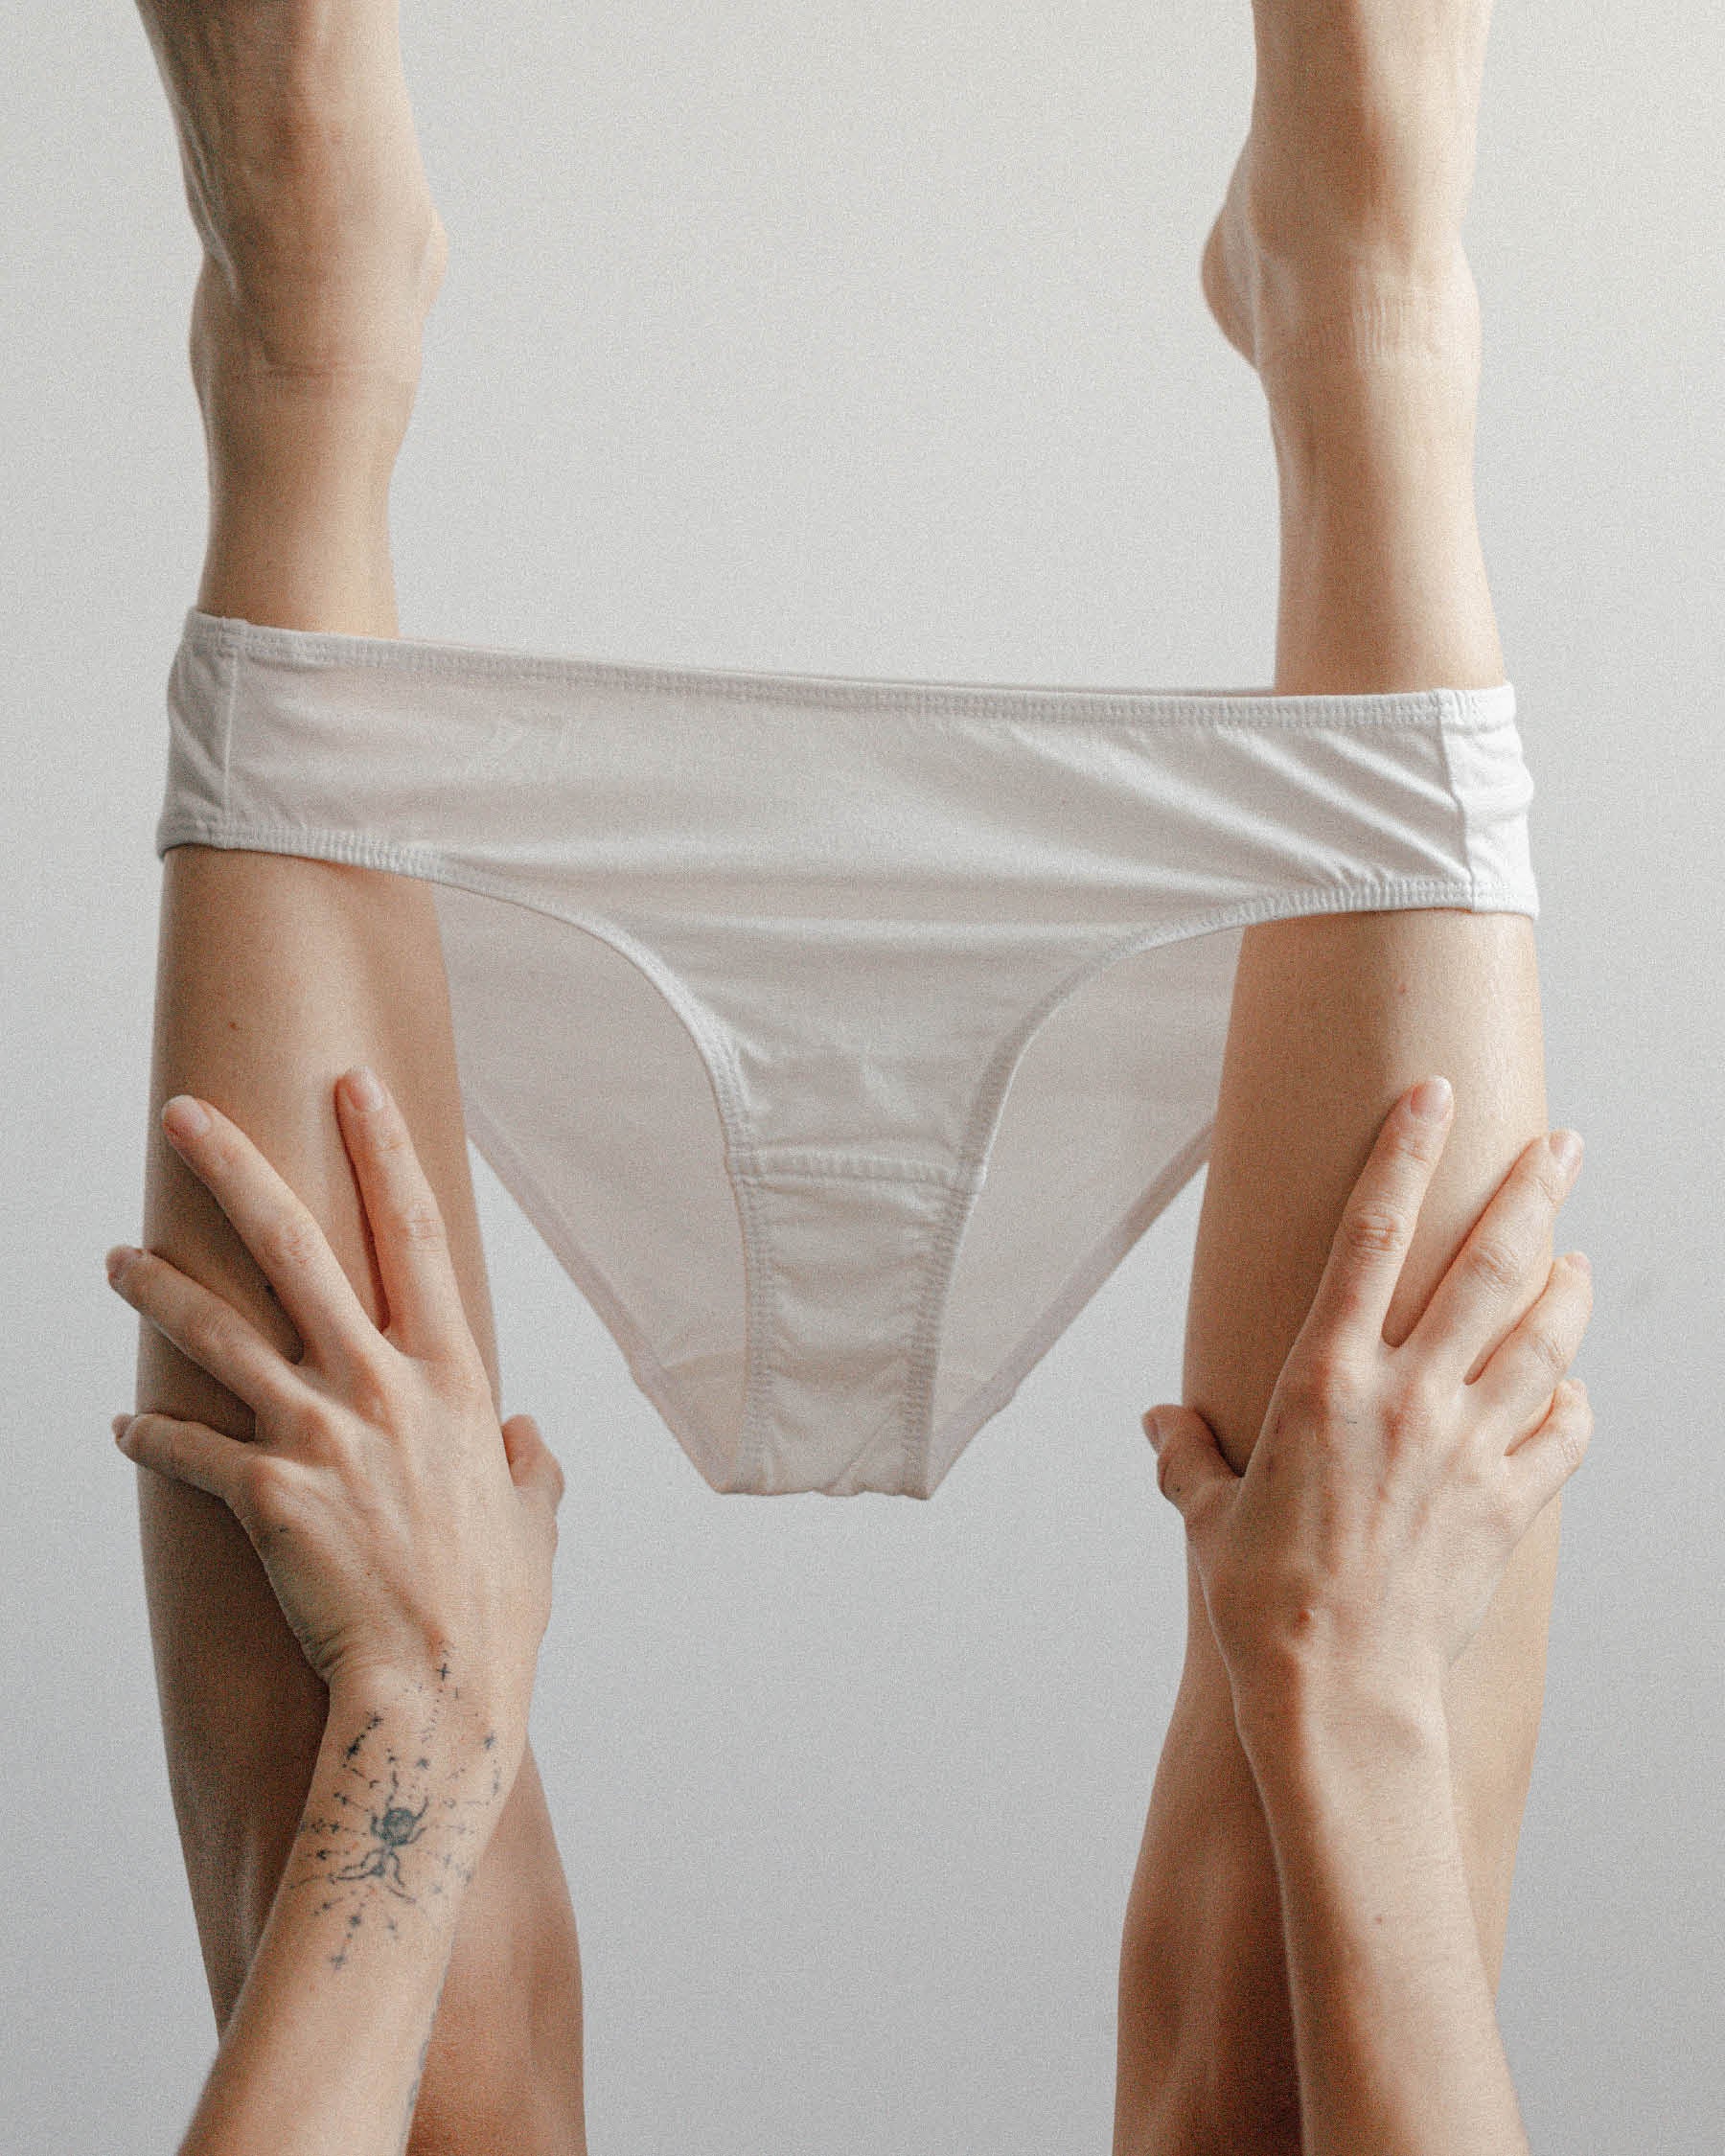 What does “clean” underwear mean? – KENT